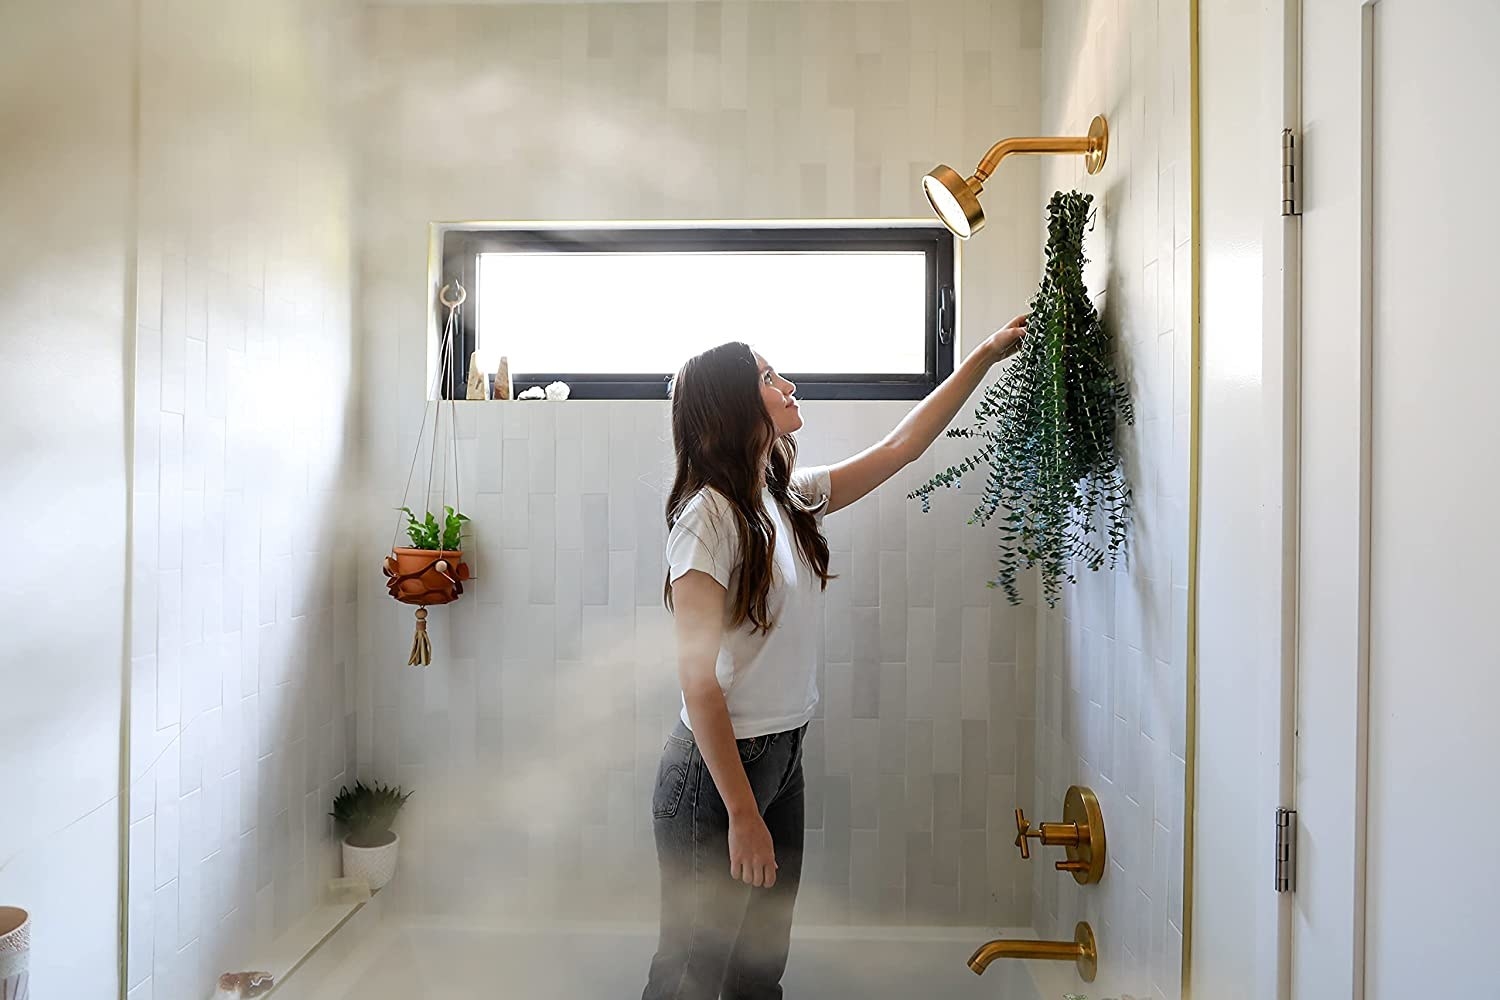 person inside shower hanging up large bundle of eucalyptus